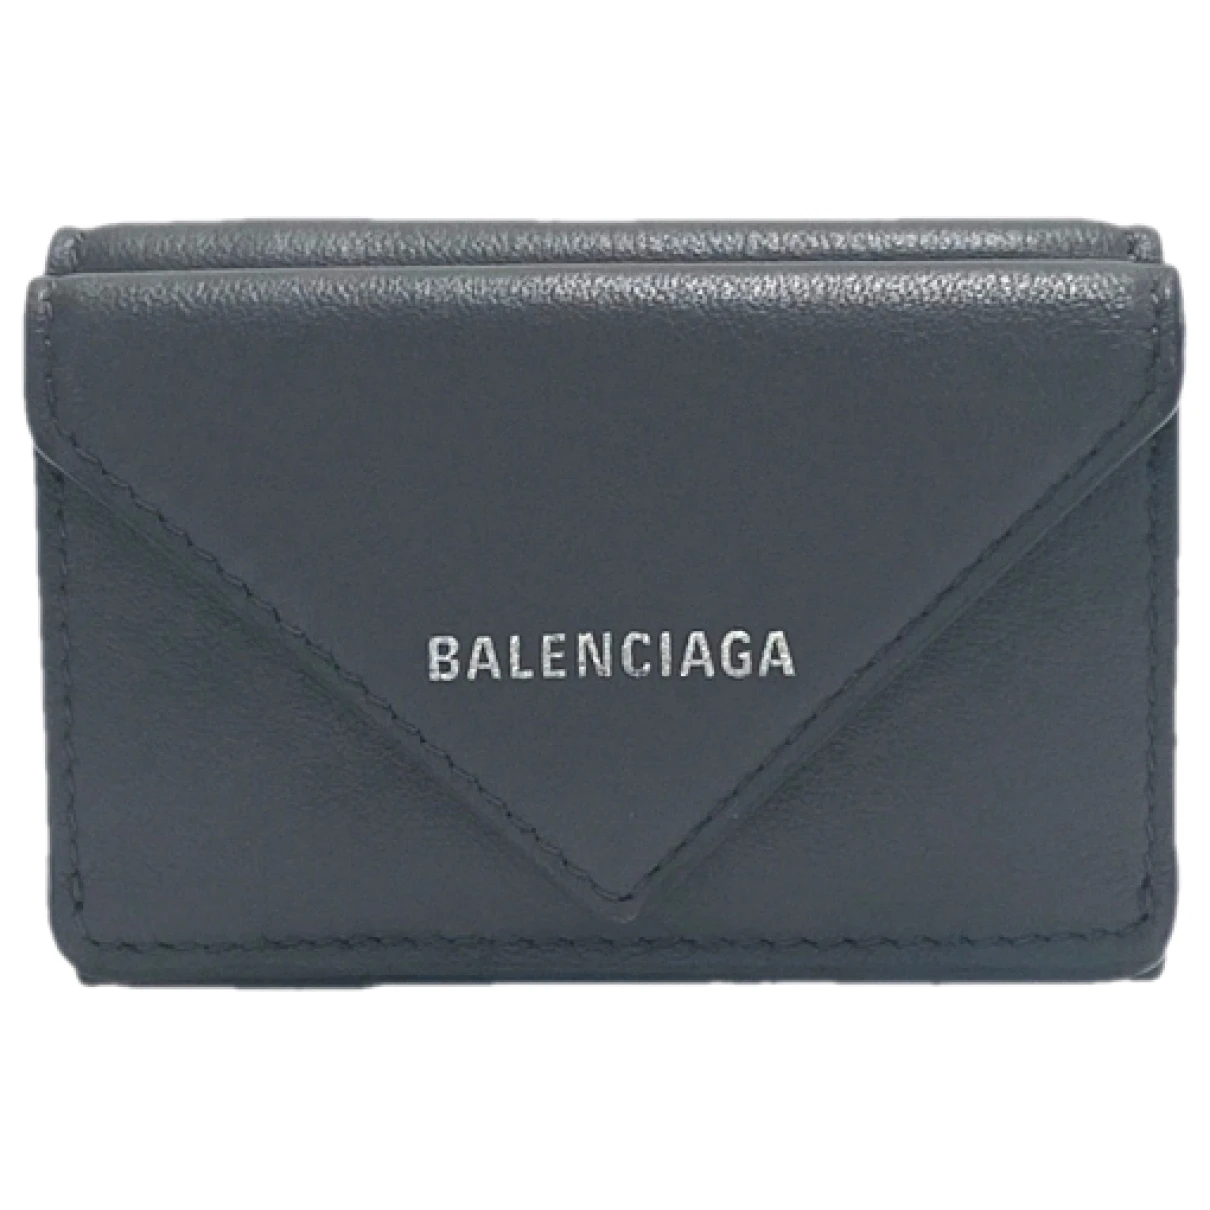 Pre-owned Balenciaga Leather Purse In Black